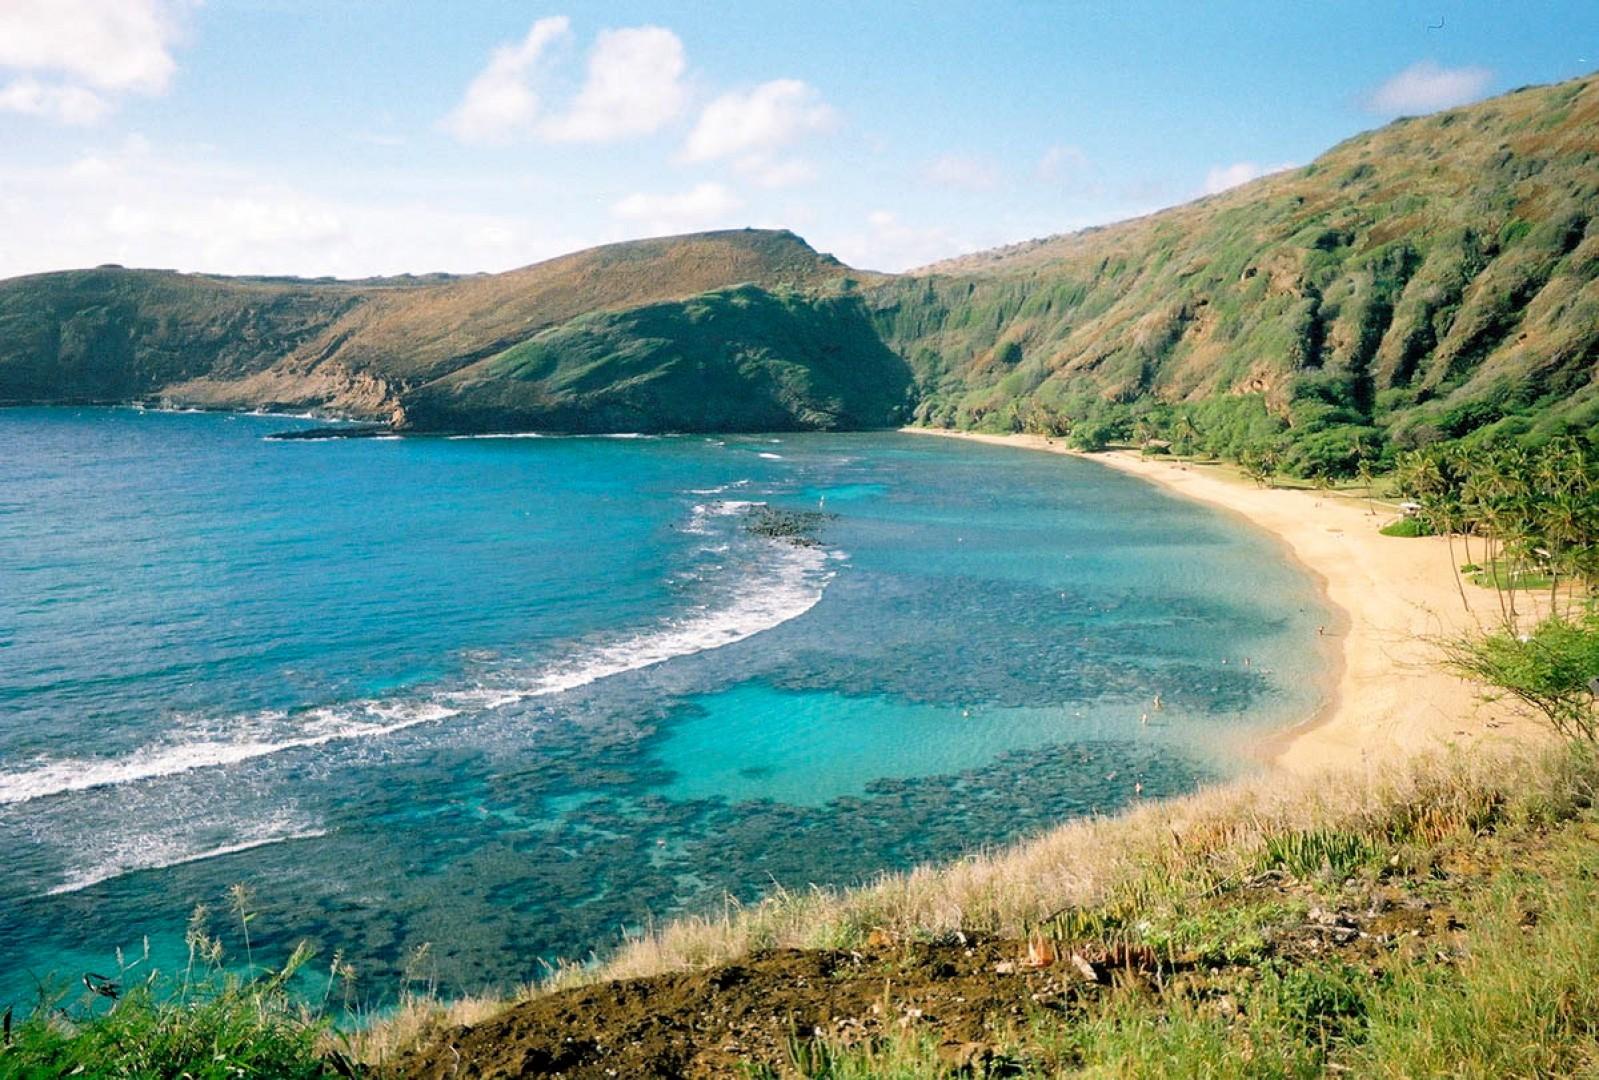 Honolulu Vacation Rentals, Hale Laulea - Beaches like world-famous Hanauma Bay are only a short drive away!